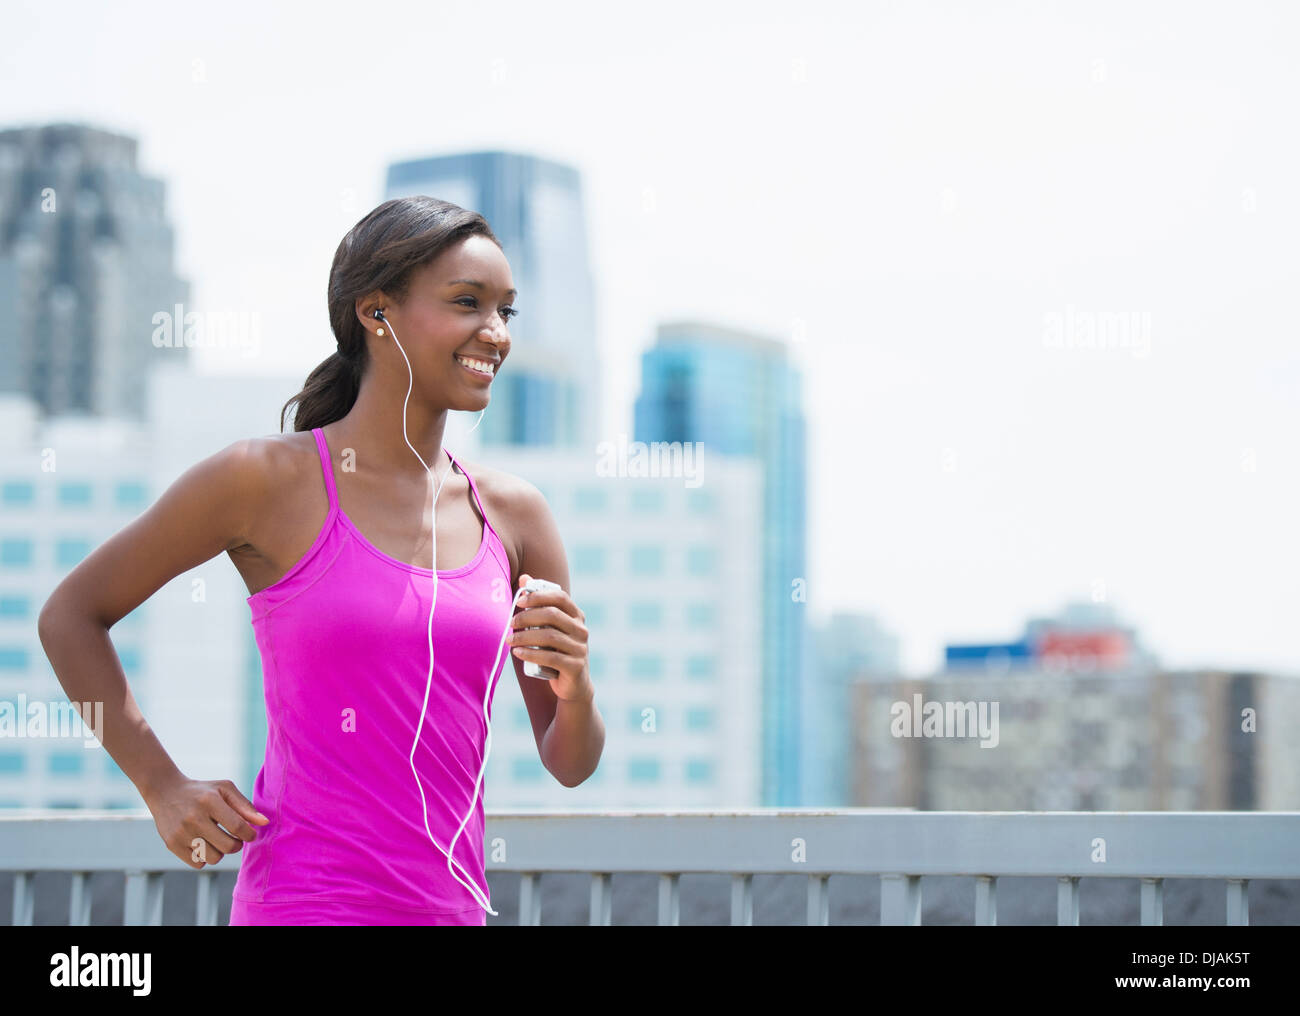 Black woman running on city street Stock Photo